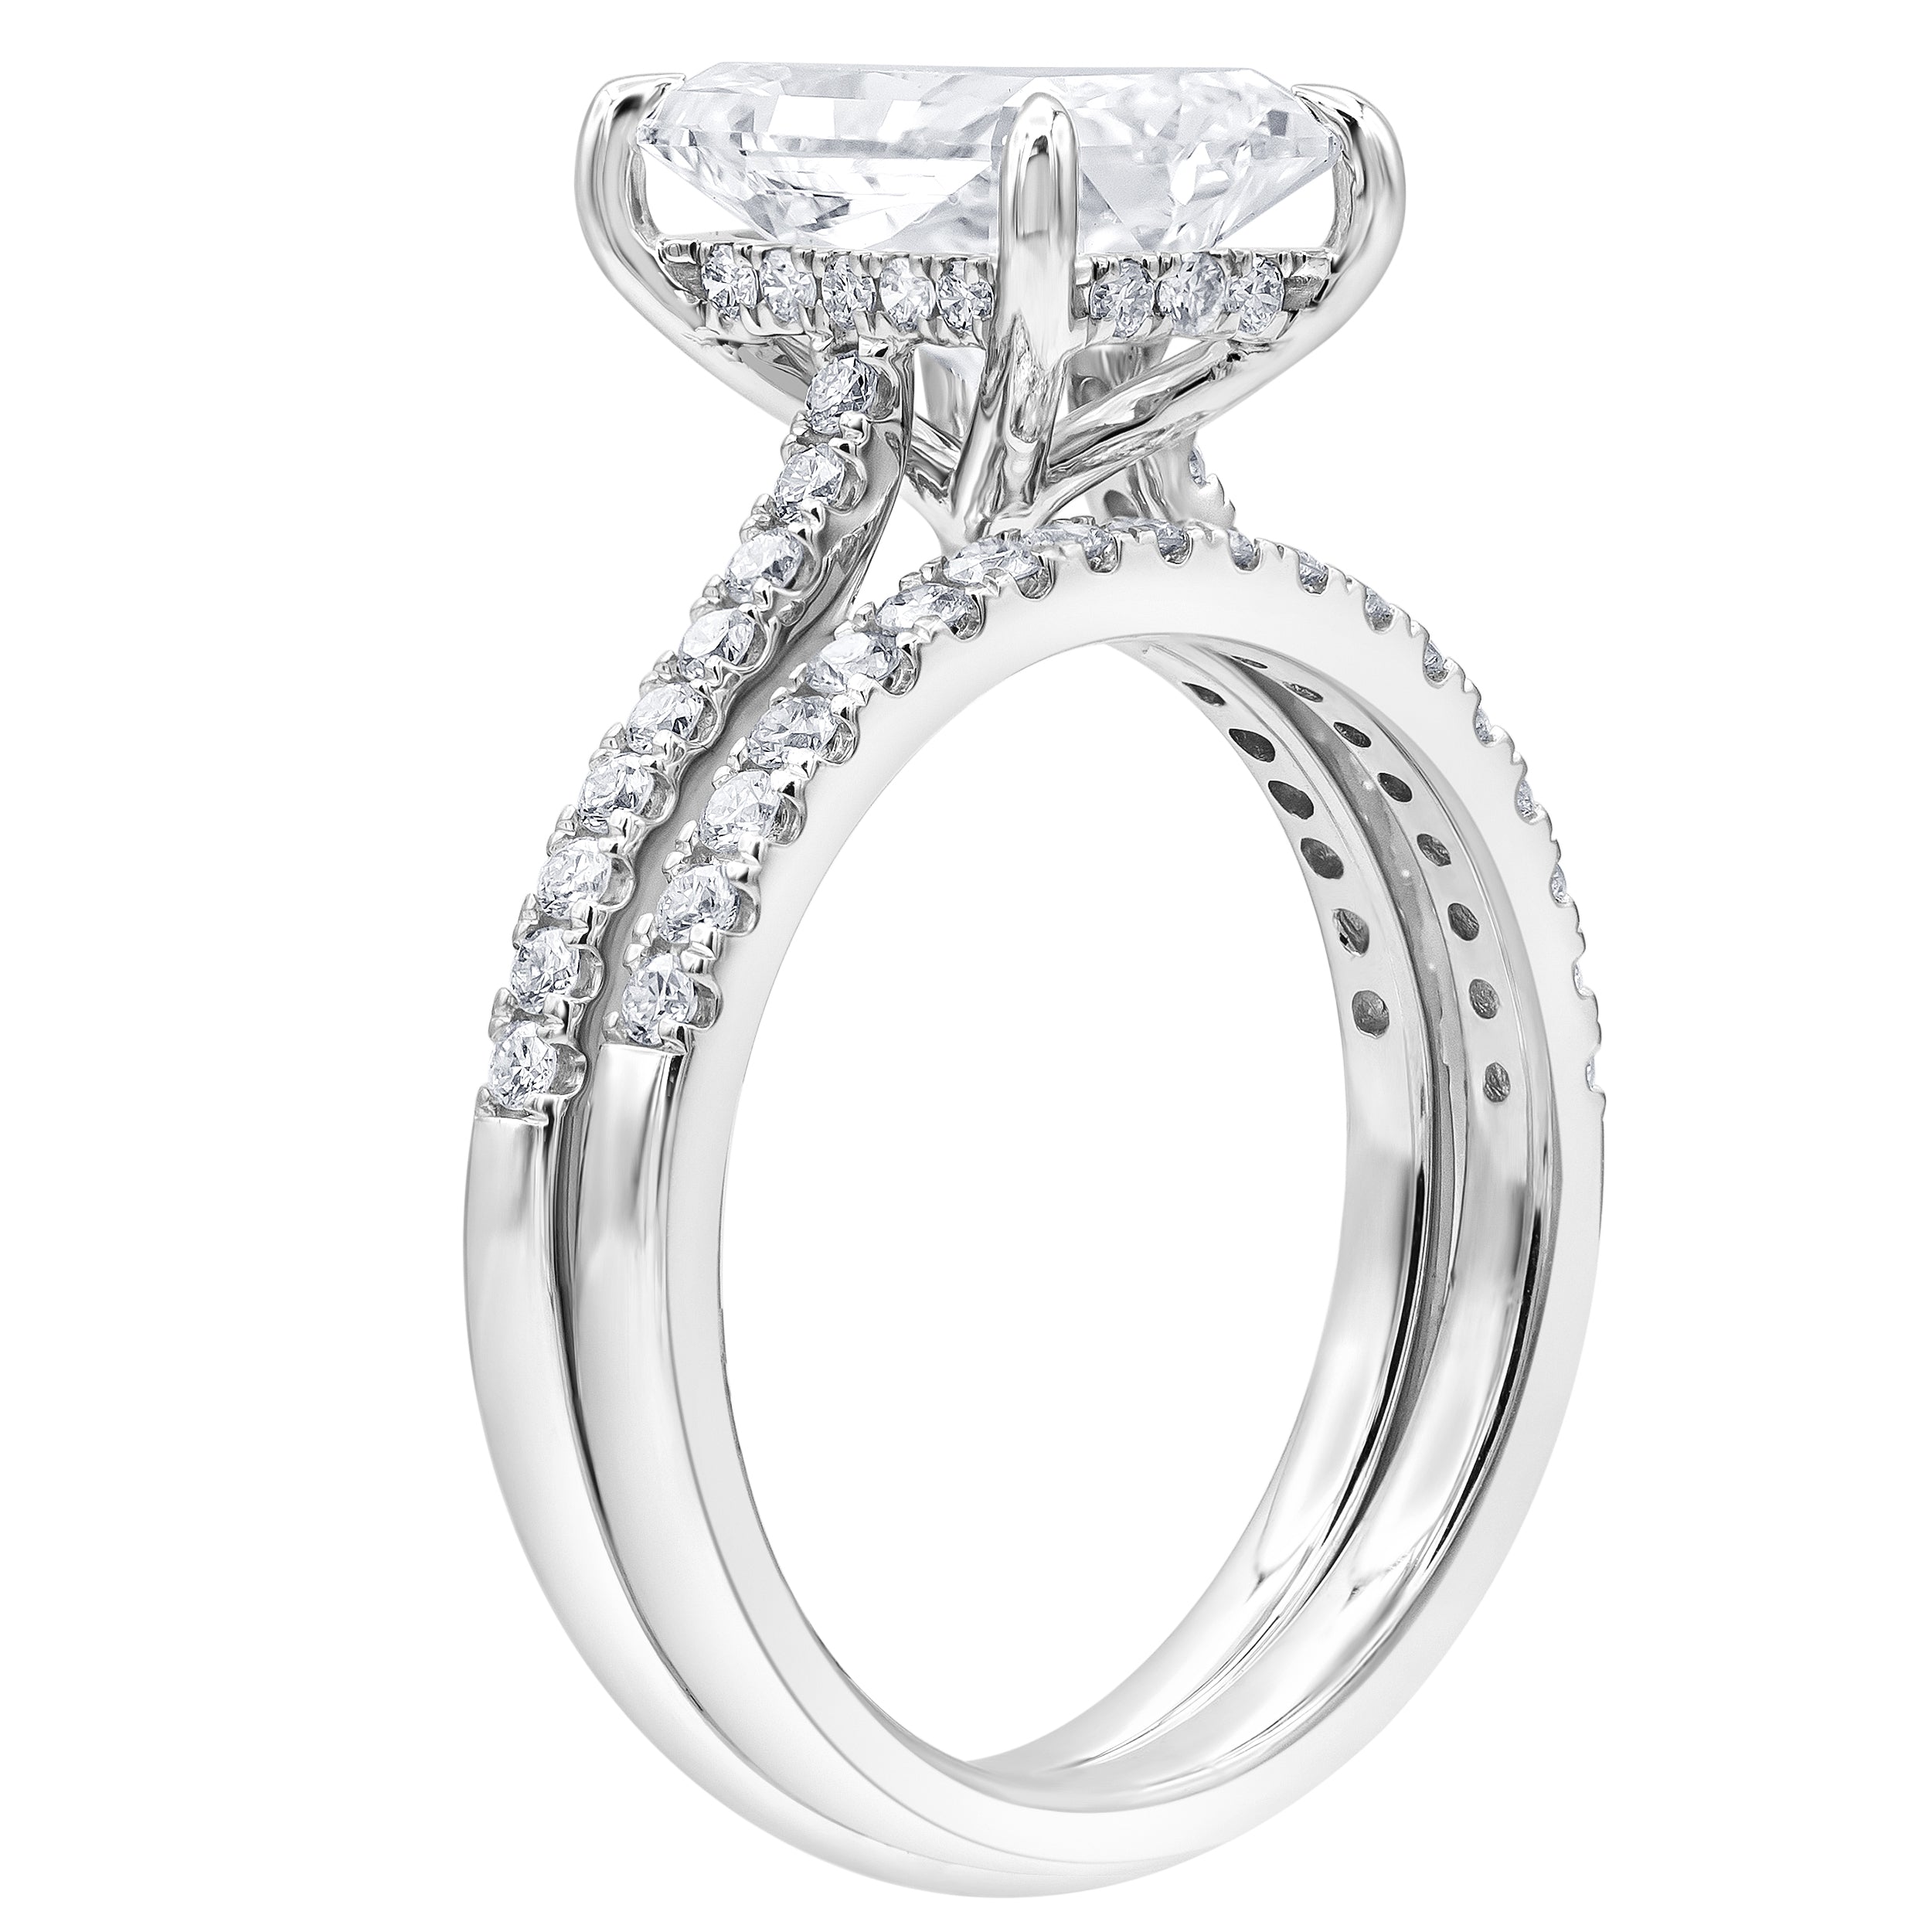 3.5 carat Radiant Hidden Halo Diamond Ring